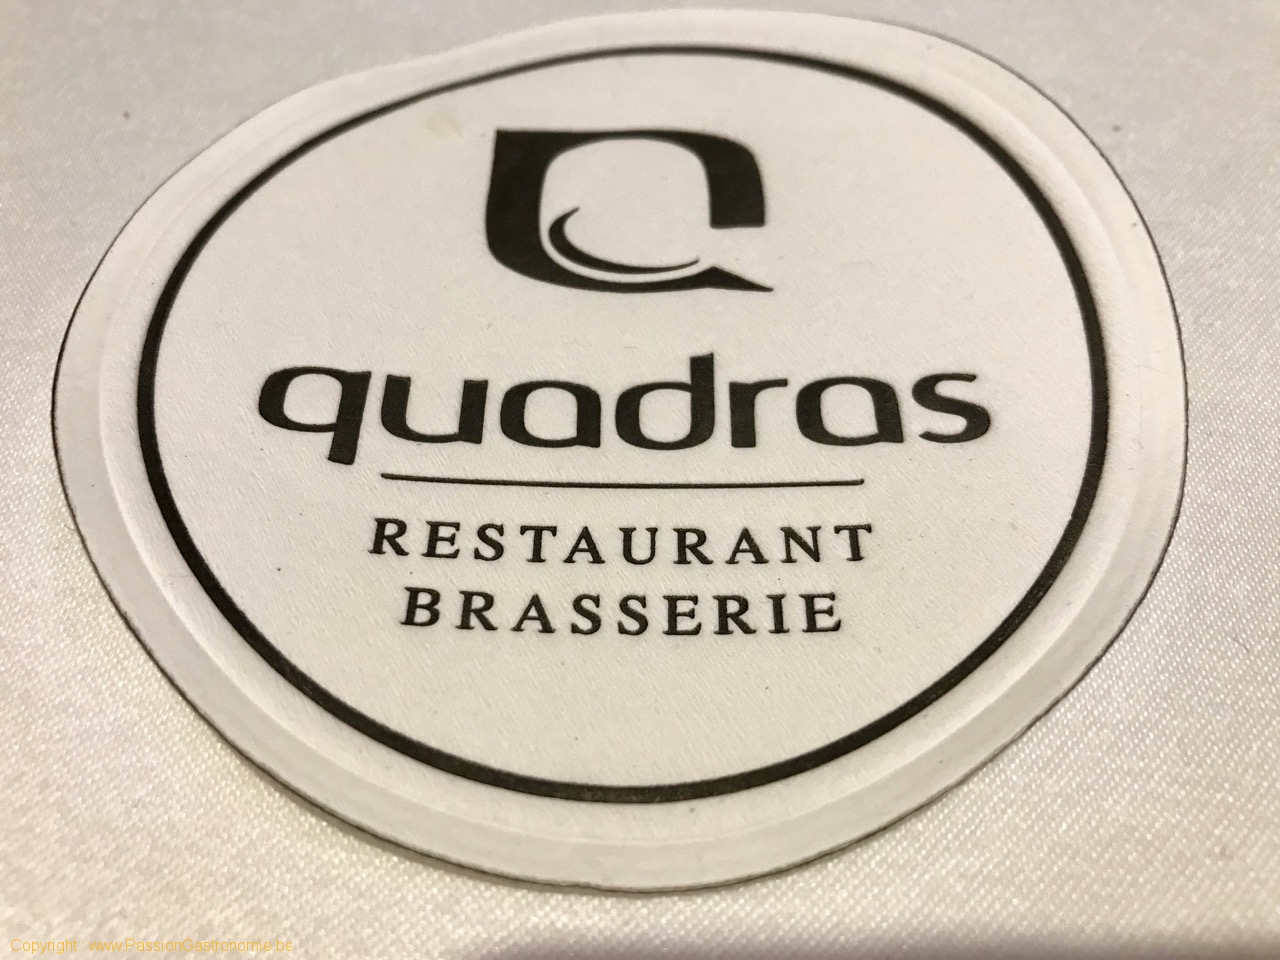 Restaurant Quadras - Le logo